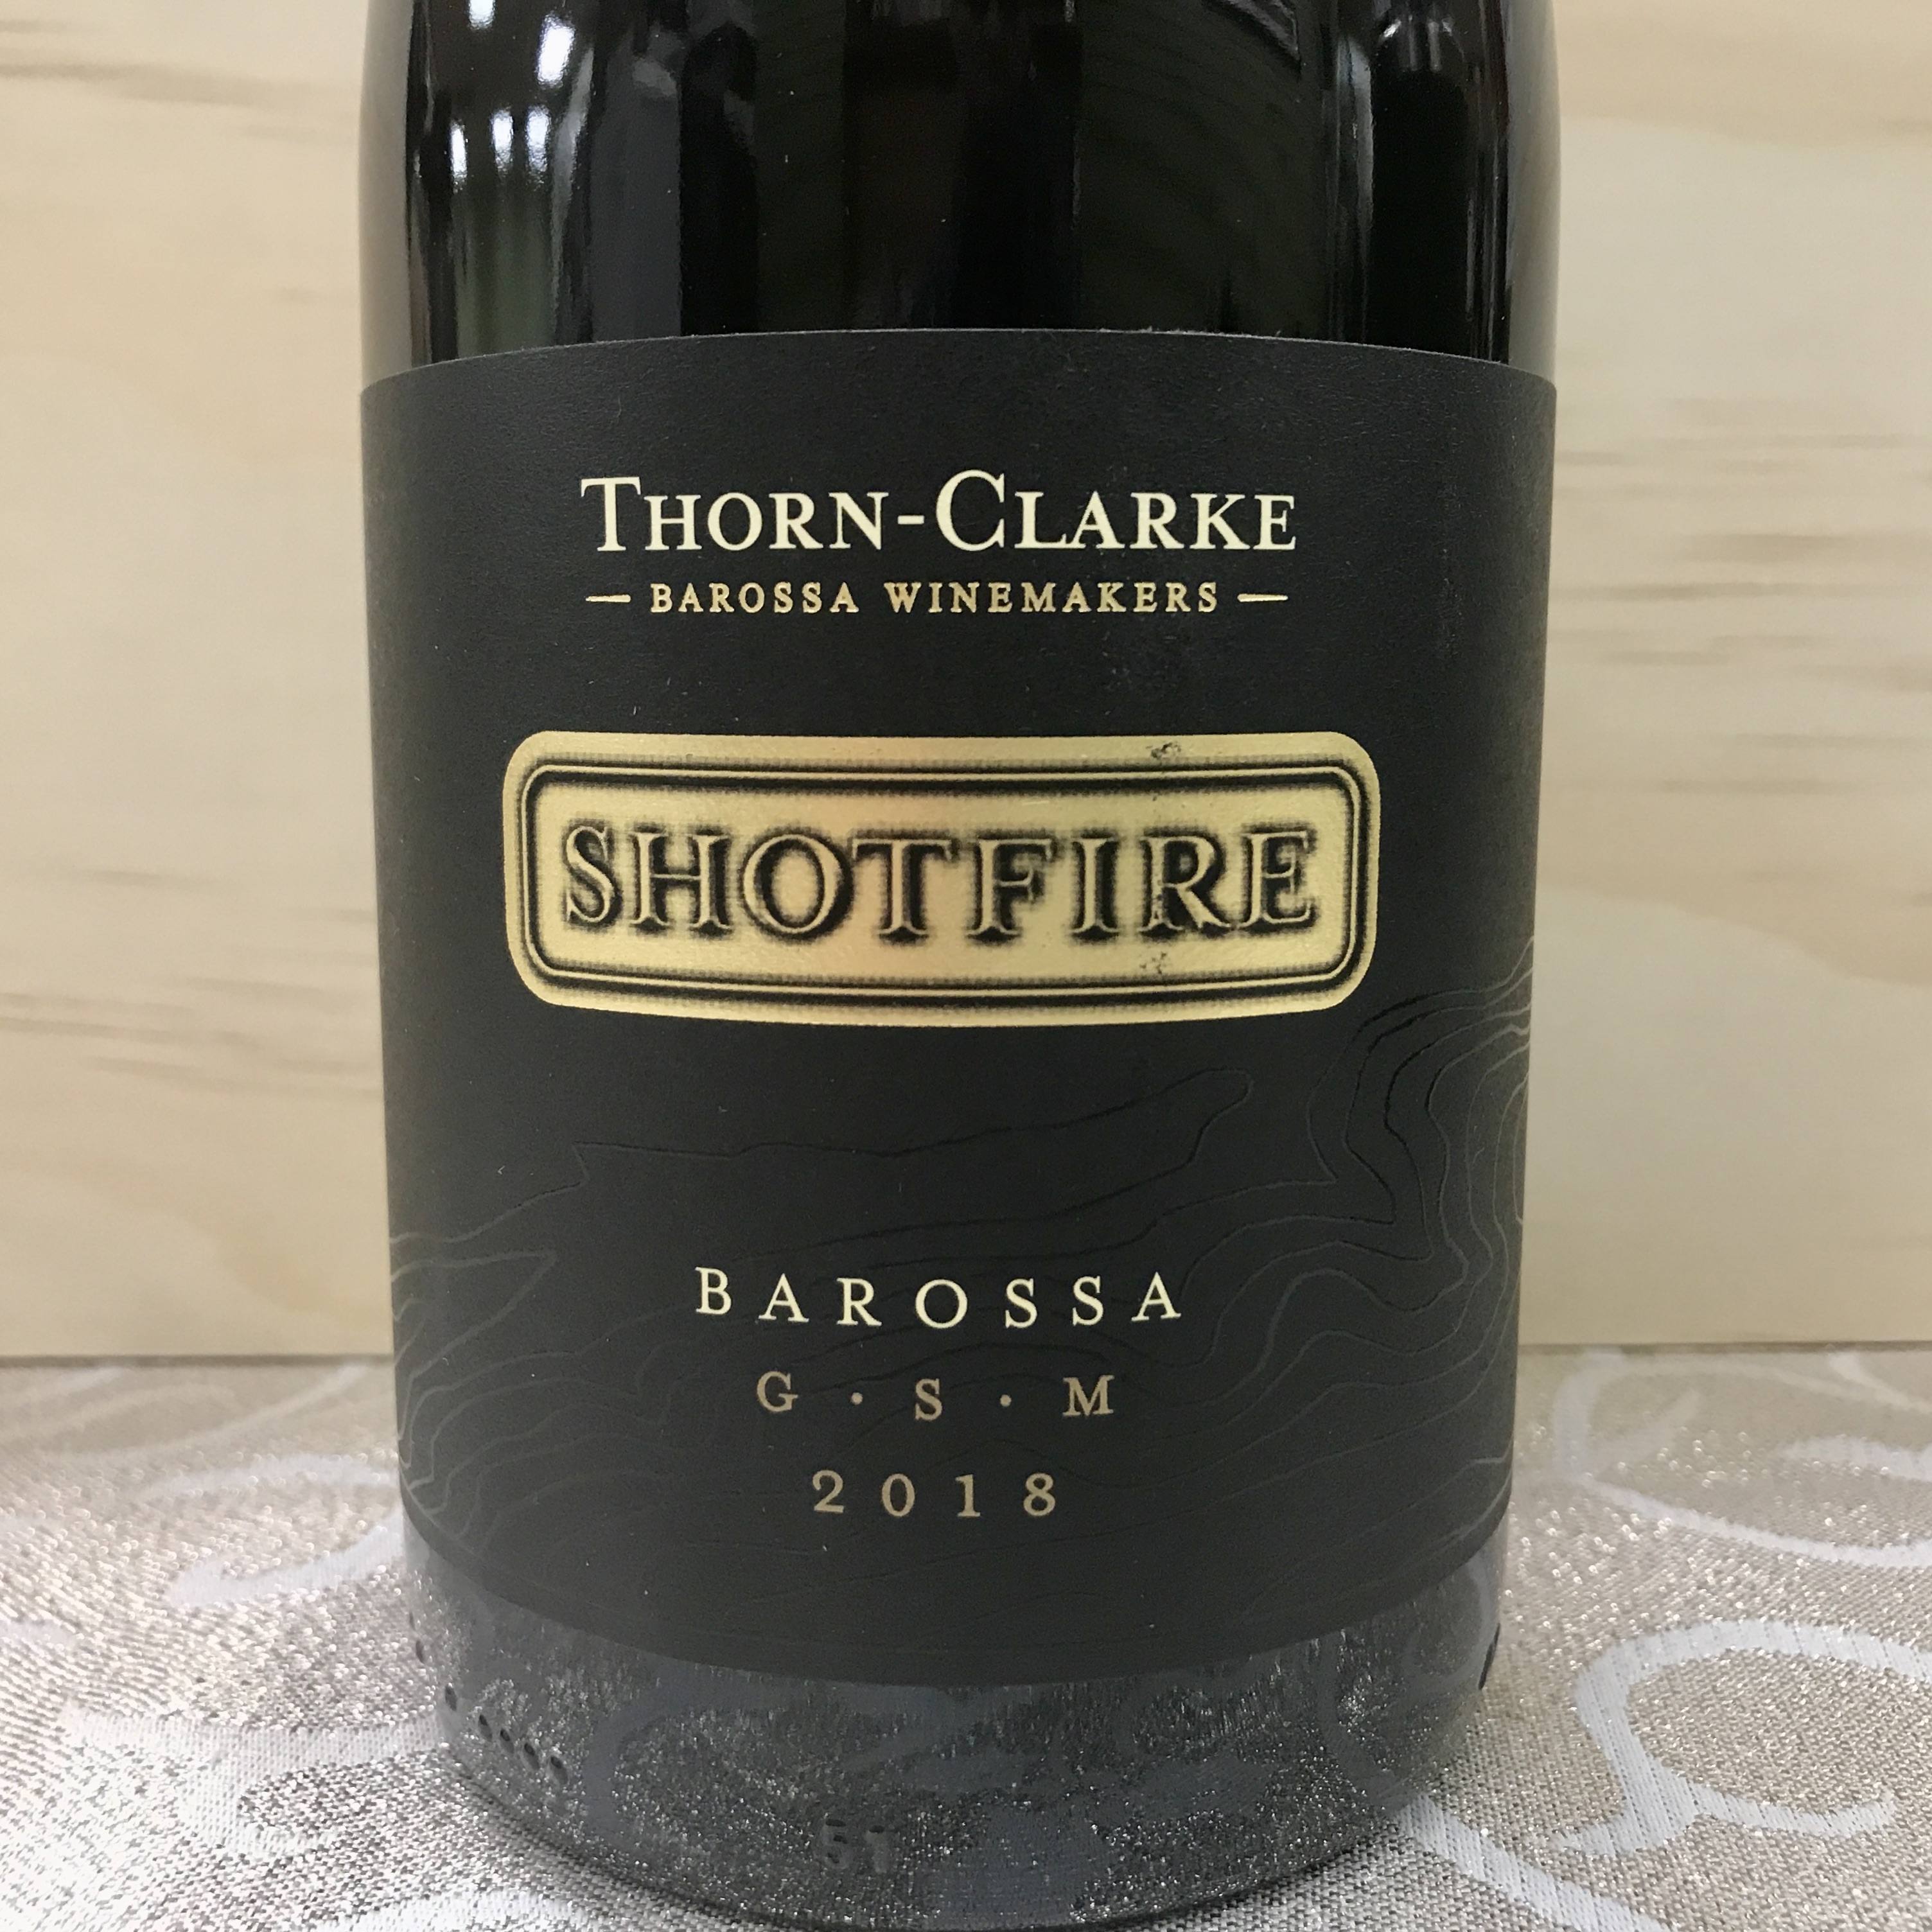 Thorn-Clarke Shotfire Barossa G S M 2018